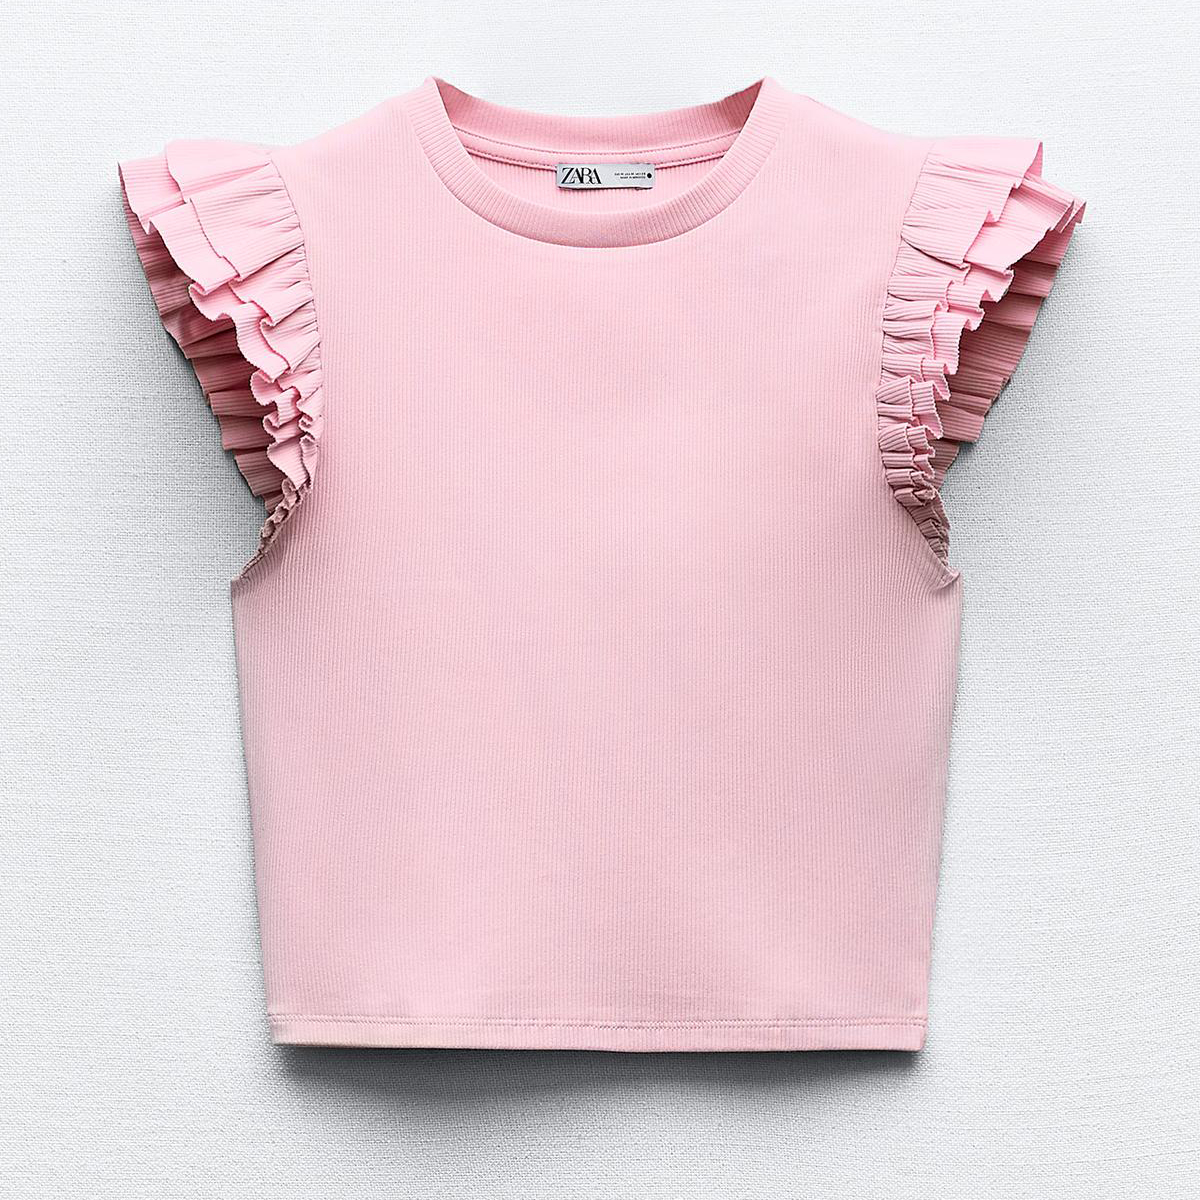 Футболка Zara Ribbed With Ruffles, розовый футболка zara ribbed fruit розовый